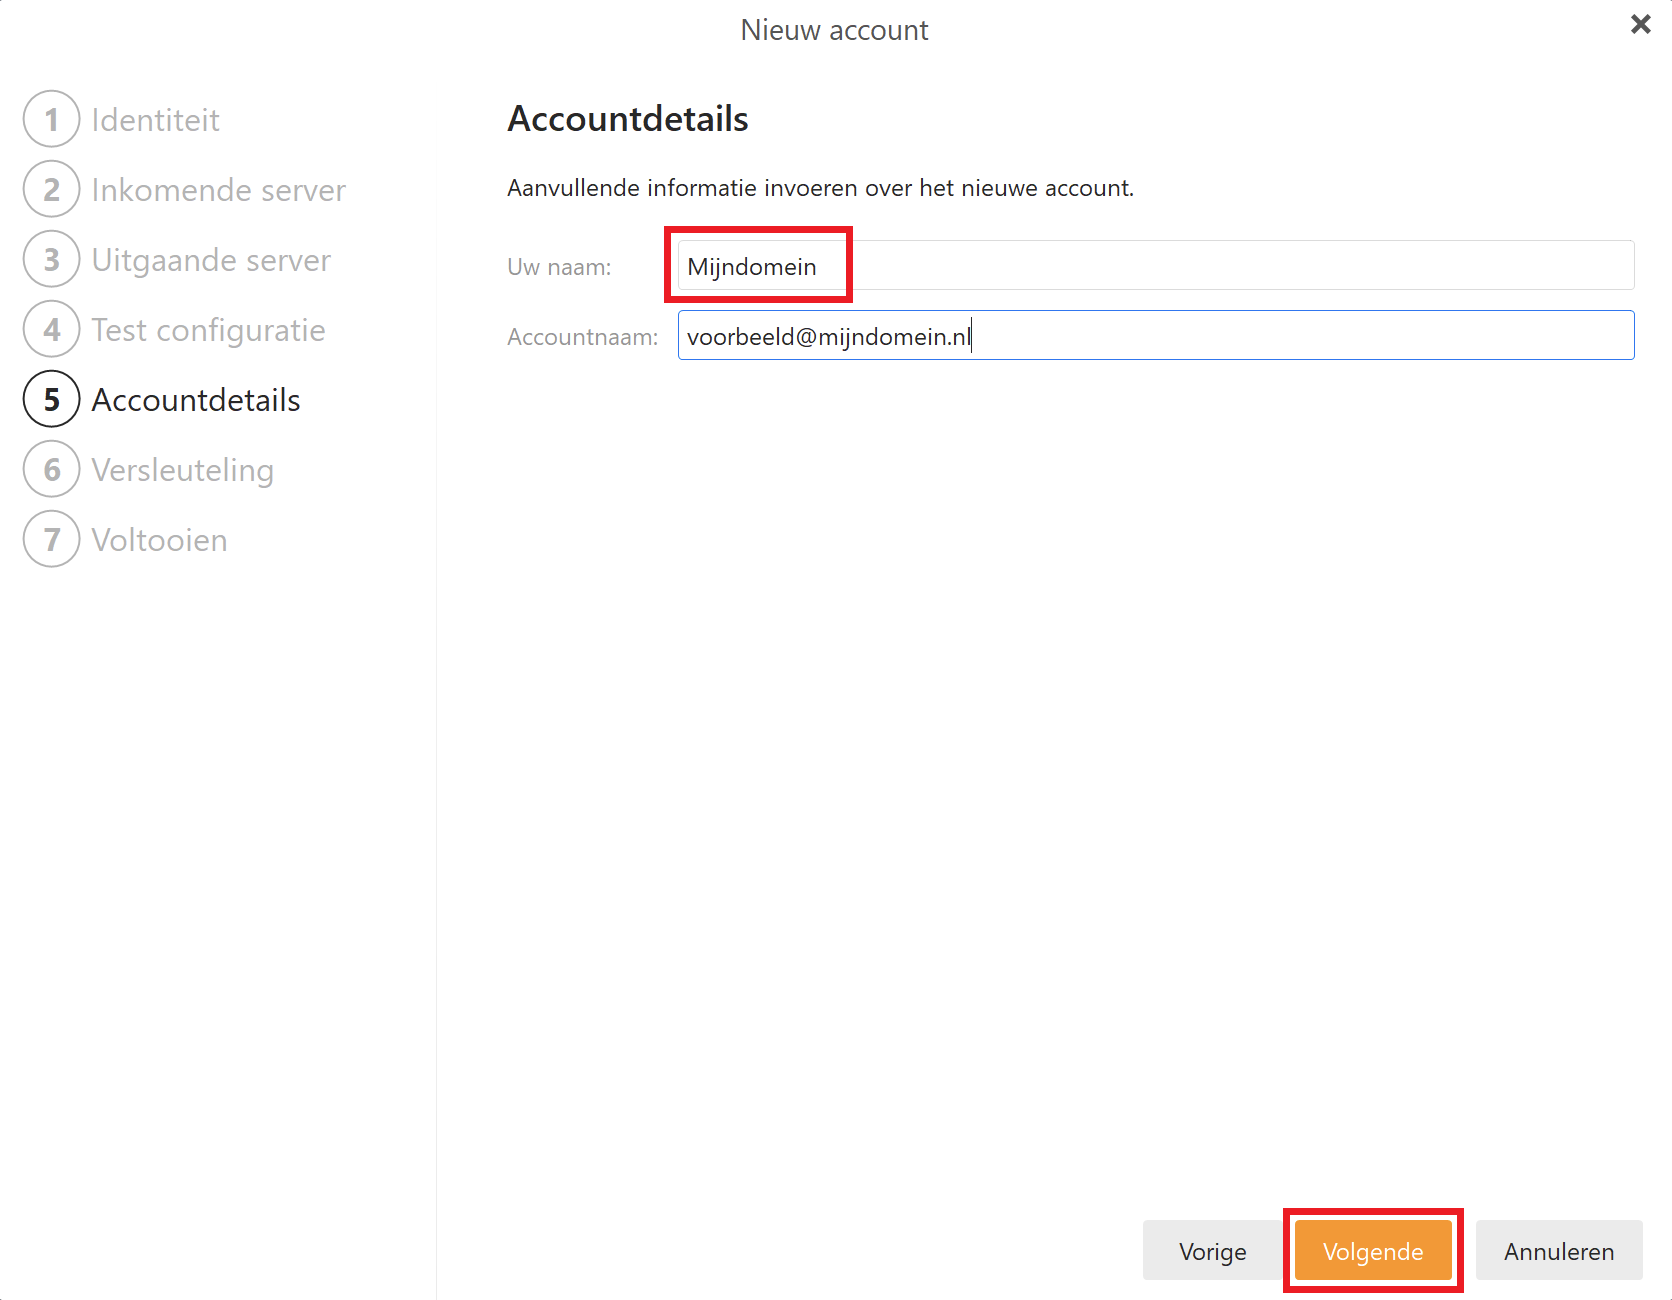 EM Client - Accountdetails - Volgende.png